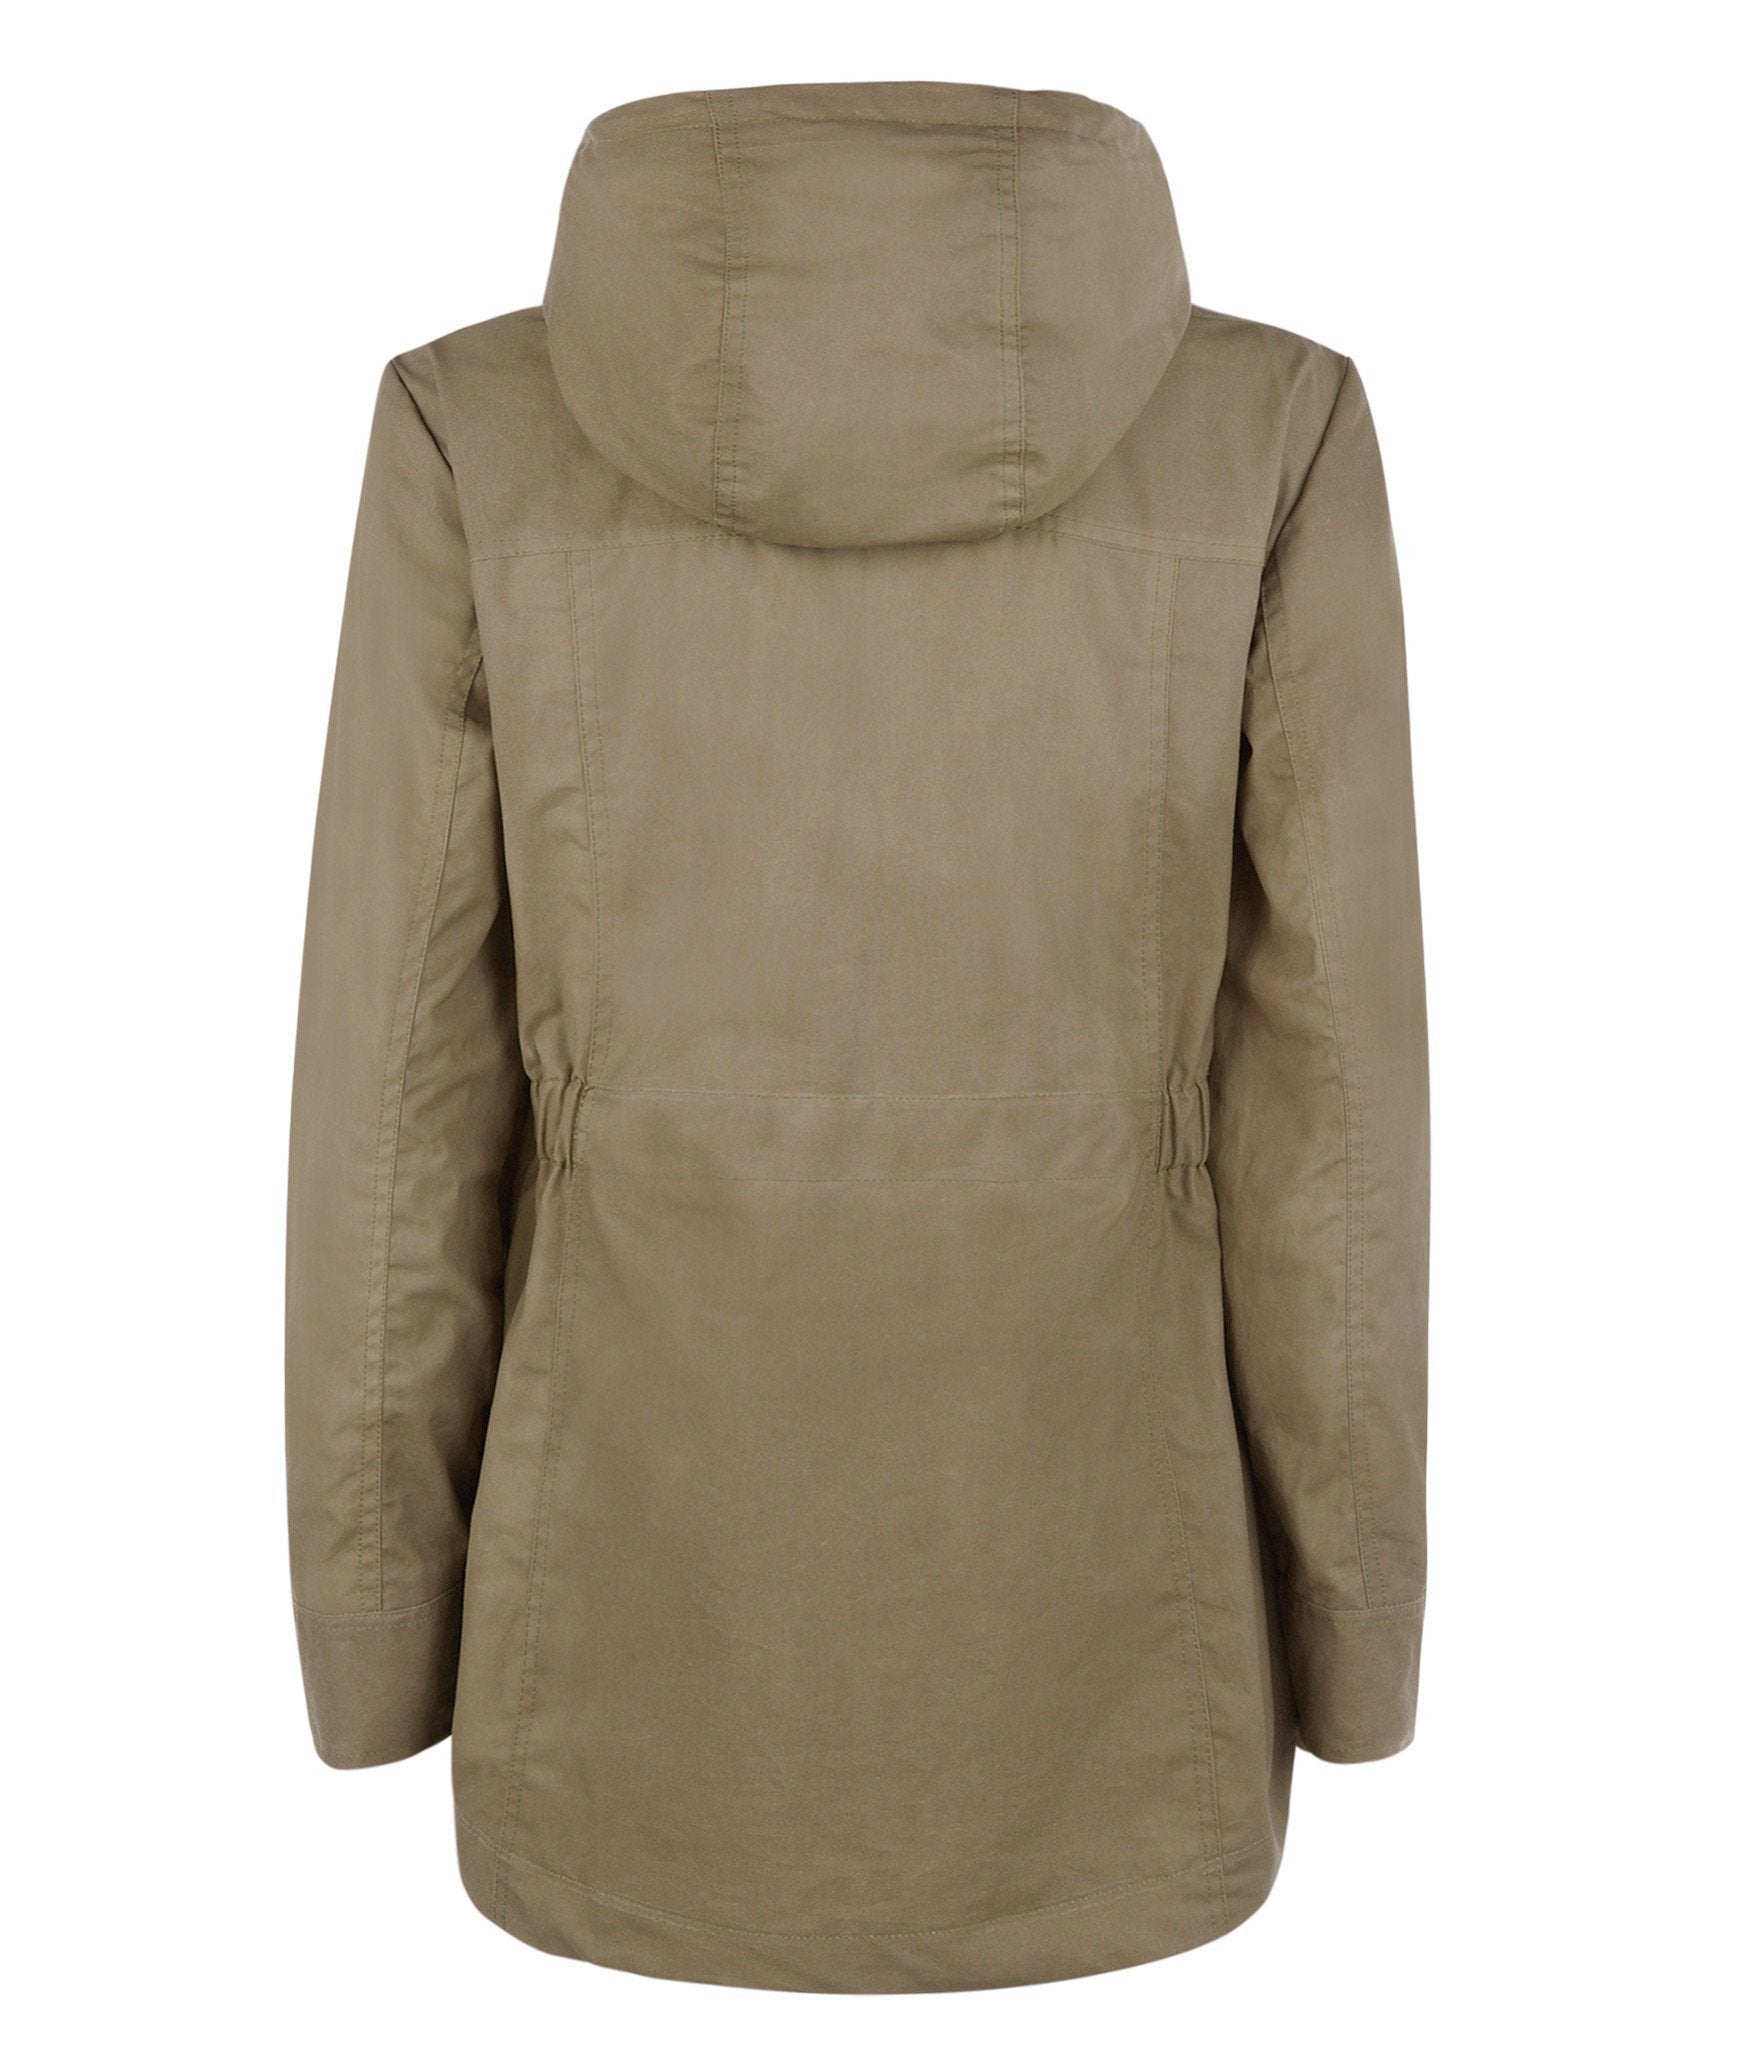 Khaki Green Ladies and Women's Waterproof Wax Jacket or Coat